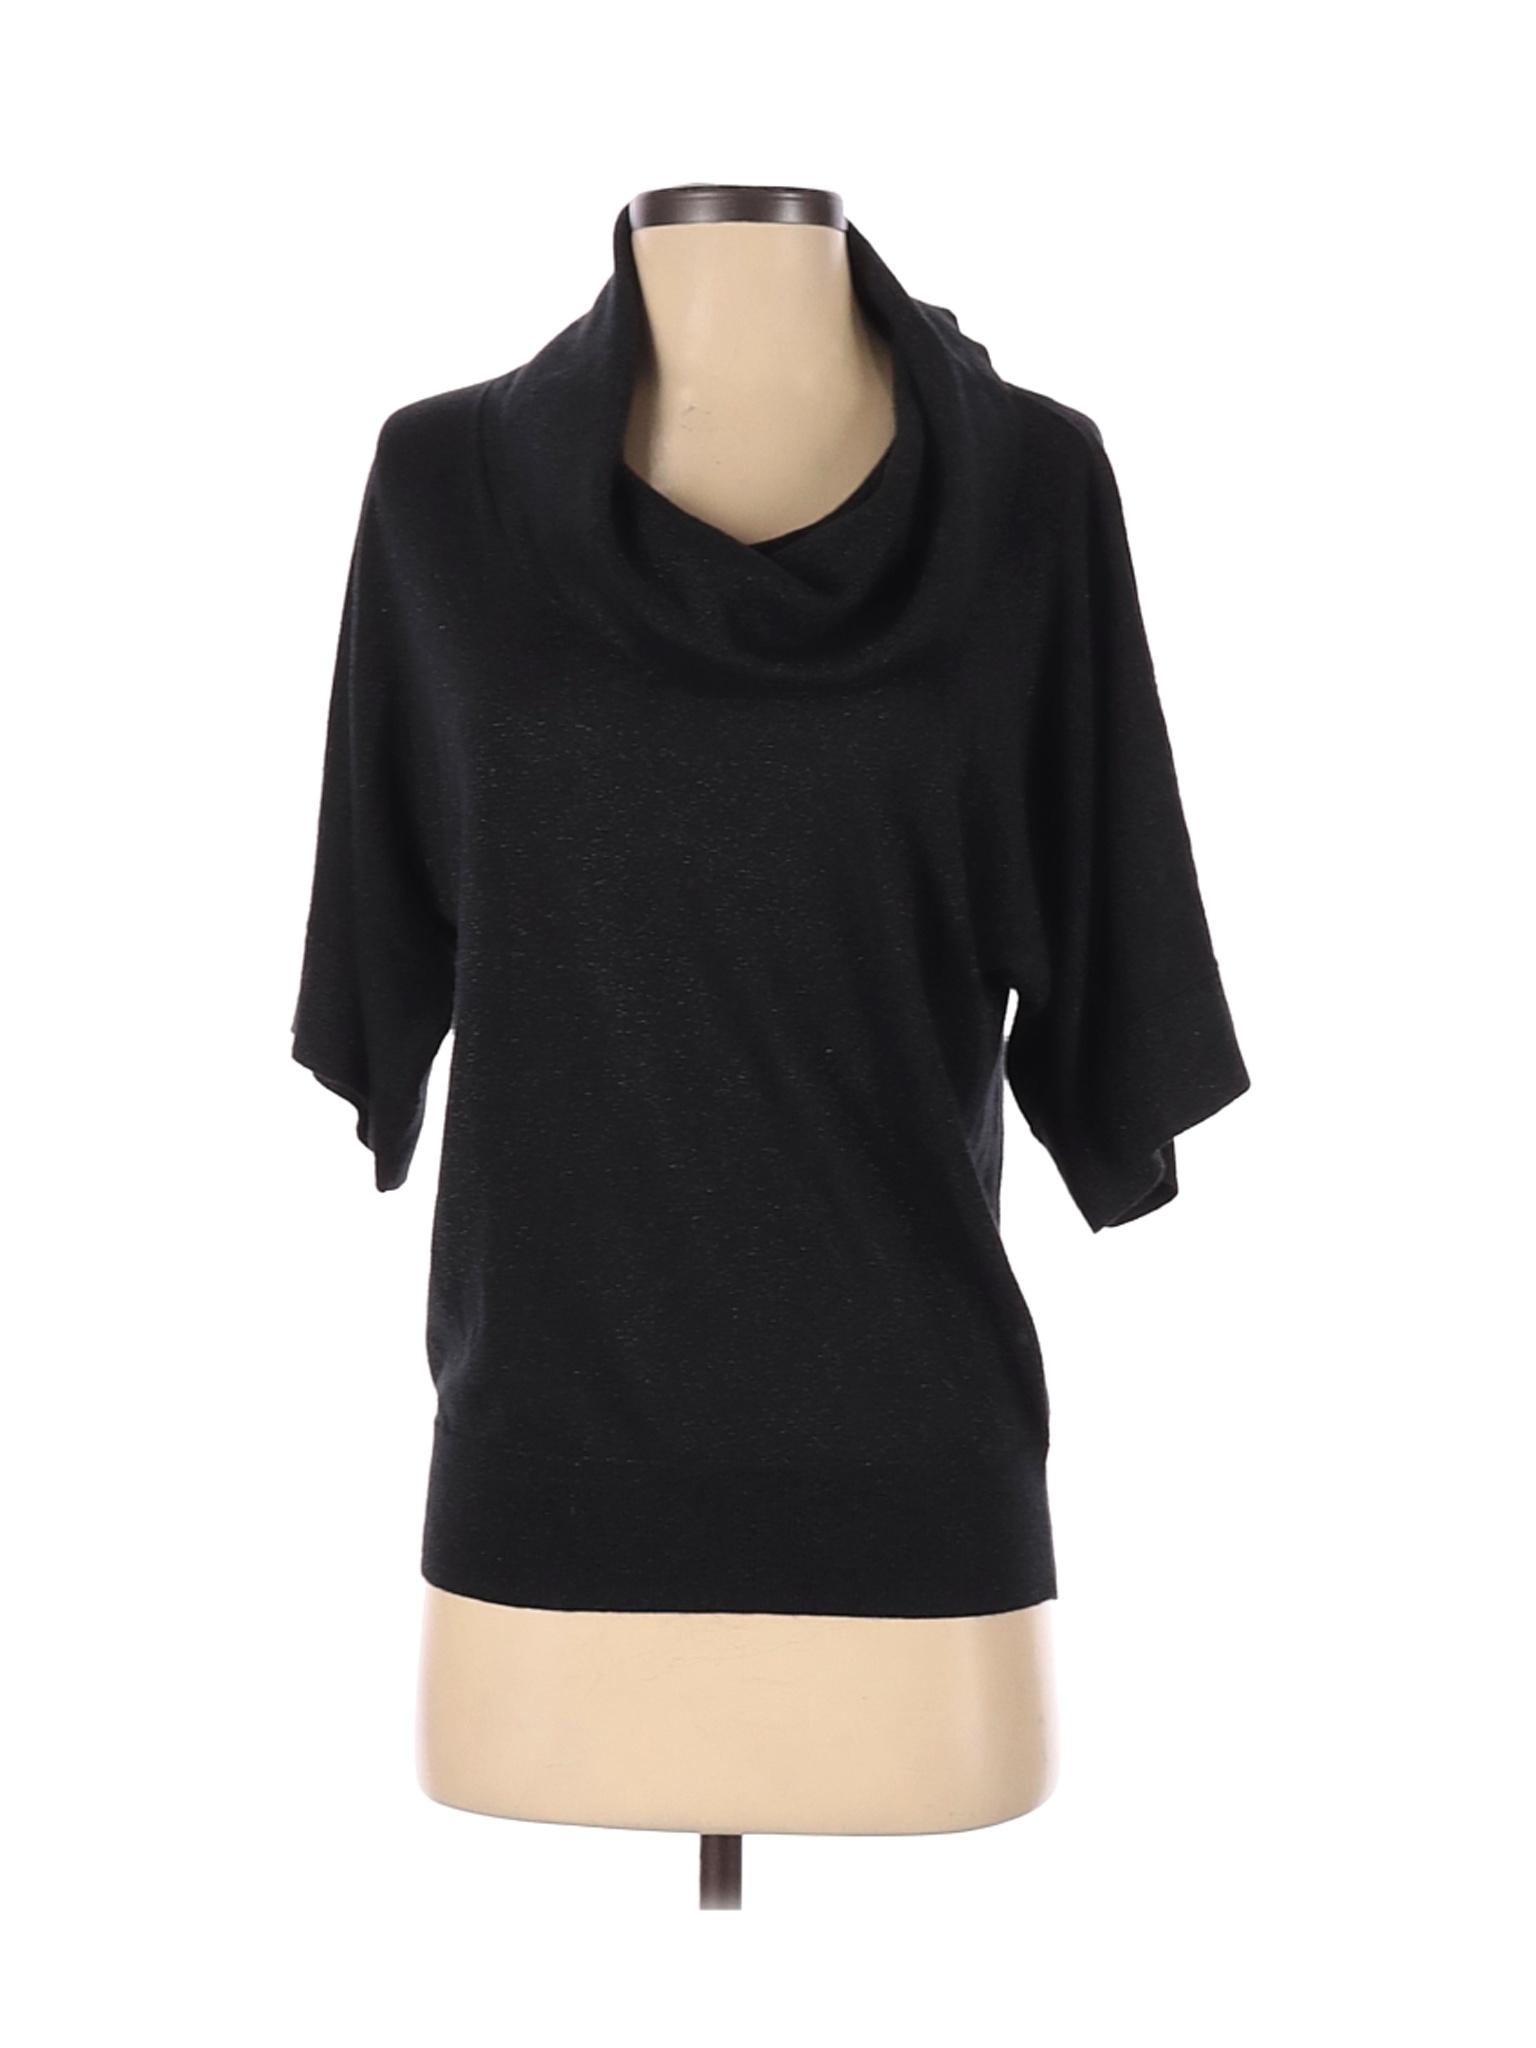 MICHAEL Michael Kors Women Black Pullover Sweater S | eBay